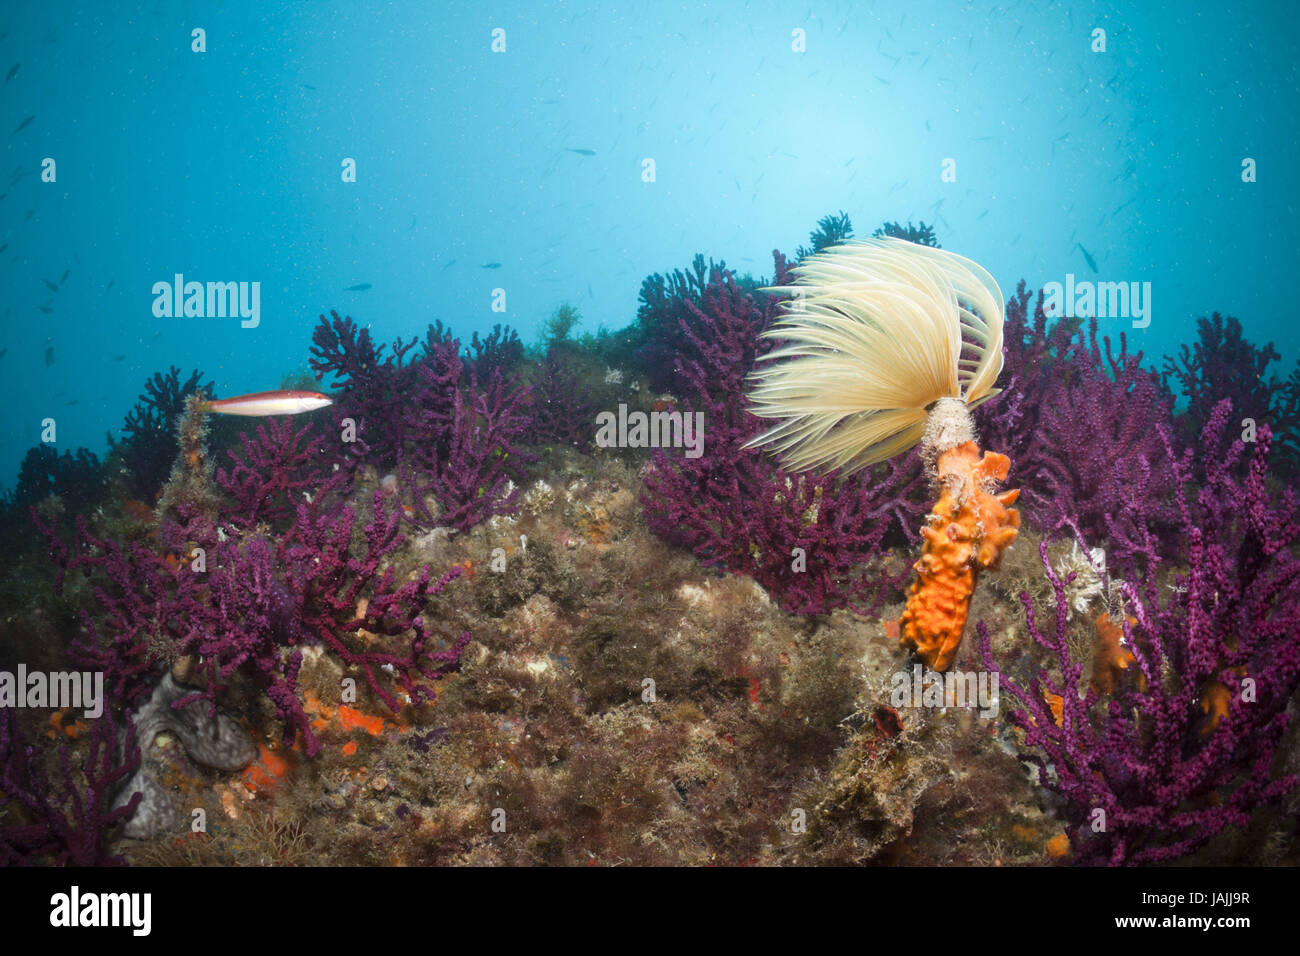 Schraubensabelle im Korallenriff, Spirographis Spallanzani, Cap de Creus, Costa Brava, Spanien Stockfoto